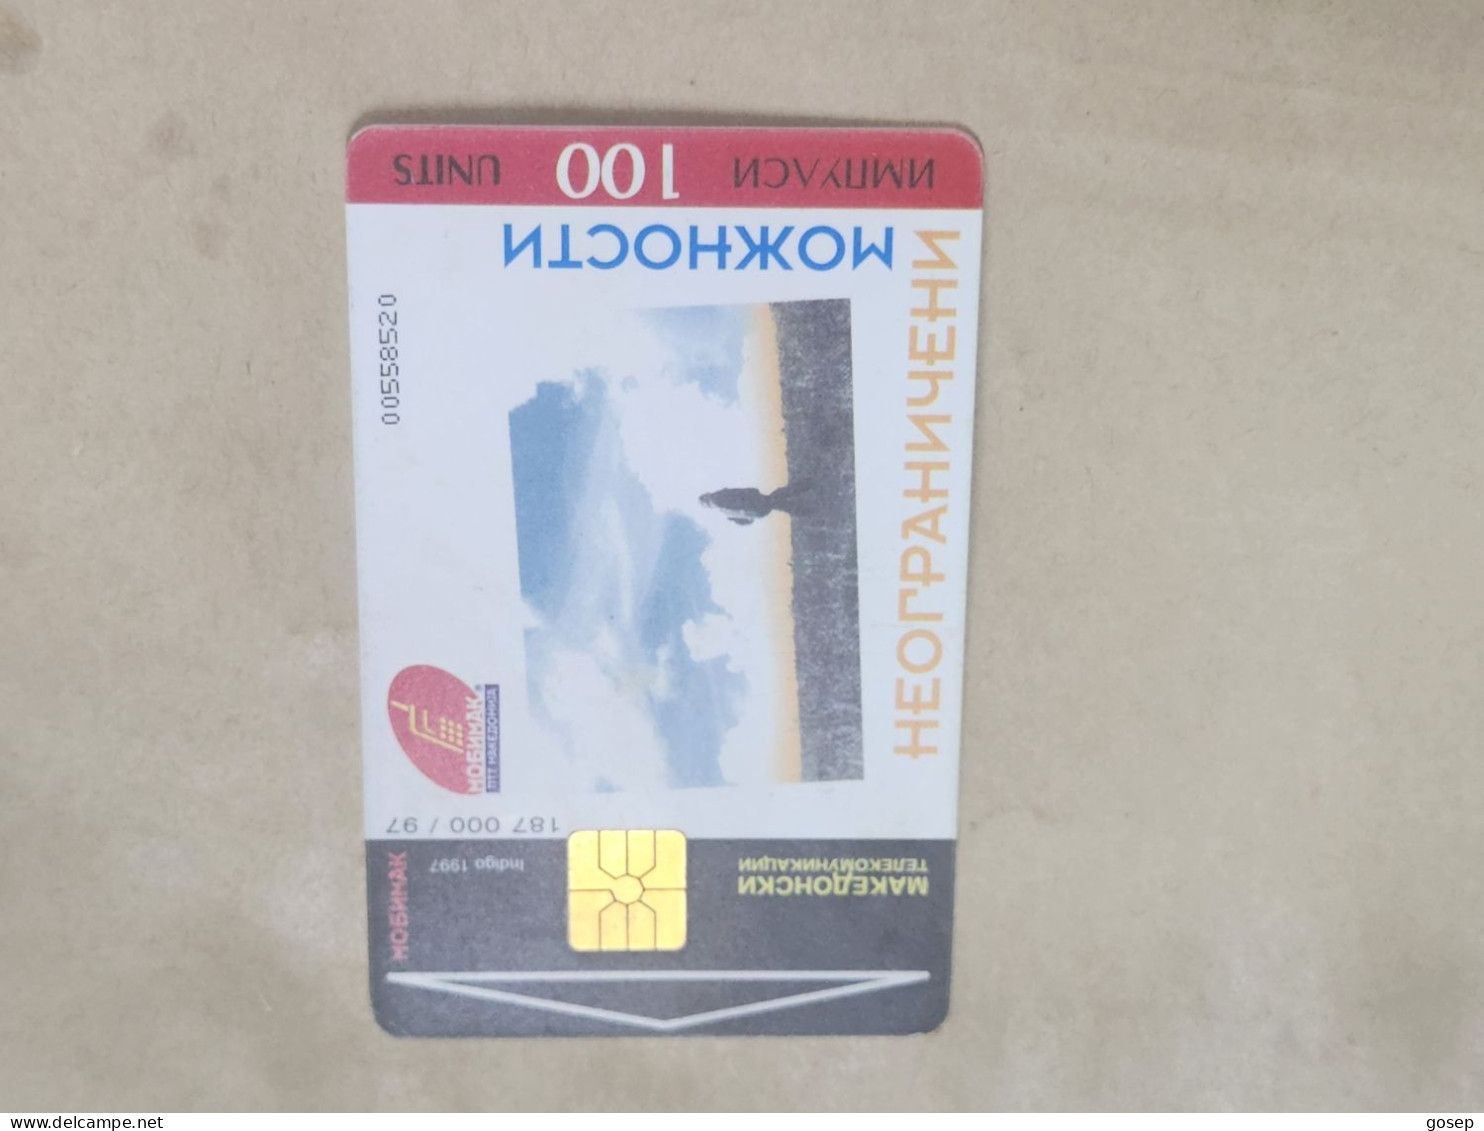 Macedonia-(MK-PTT-0007B)Mobimak Instructions (28)(4/97)(100units)(00558520)-tirage-187.000-used Card+1card Prepiad Free - North Macedonia